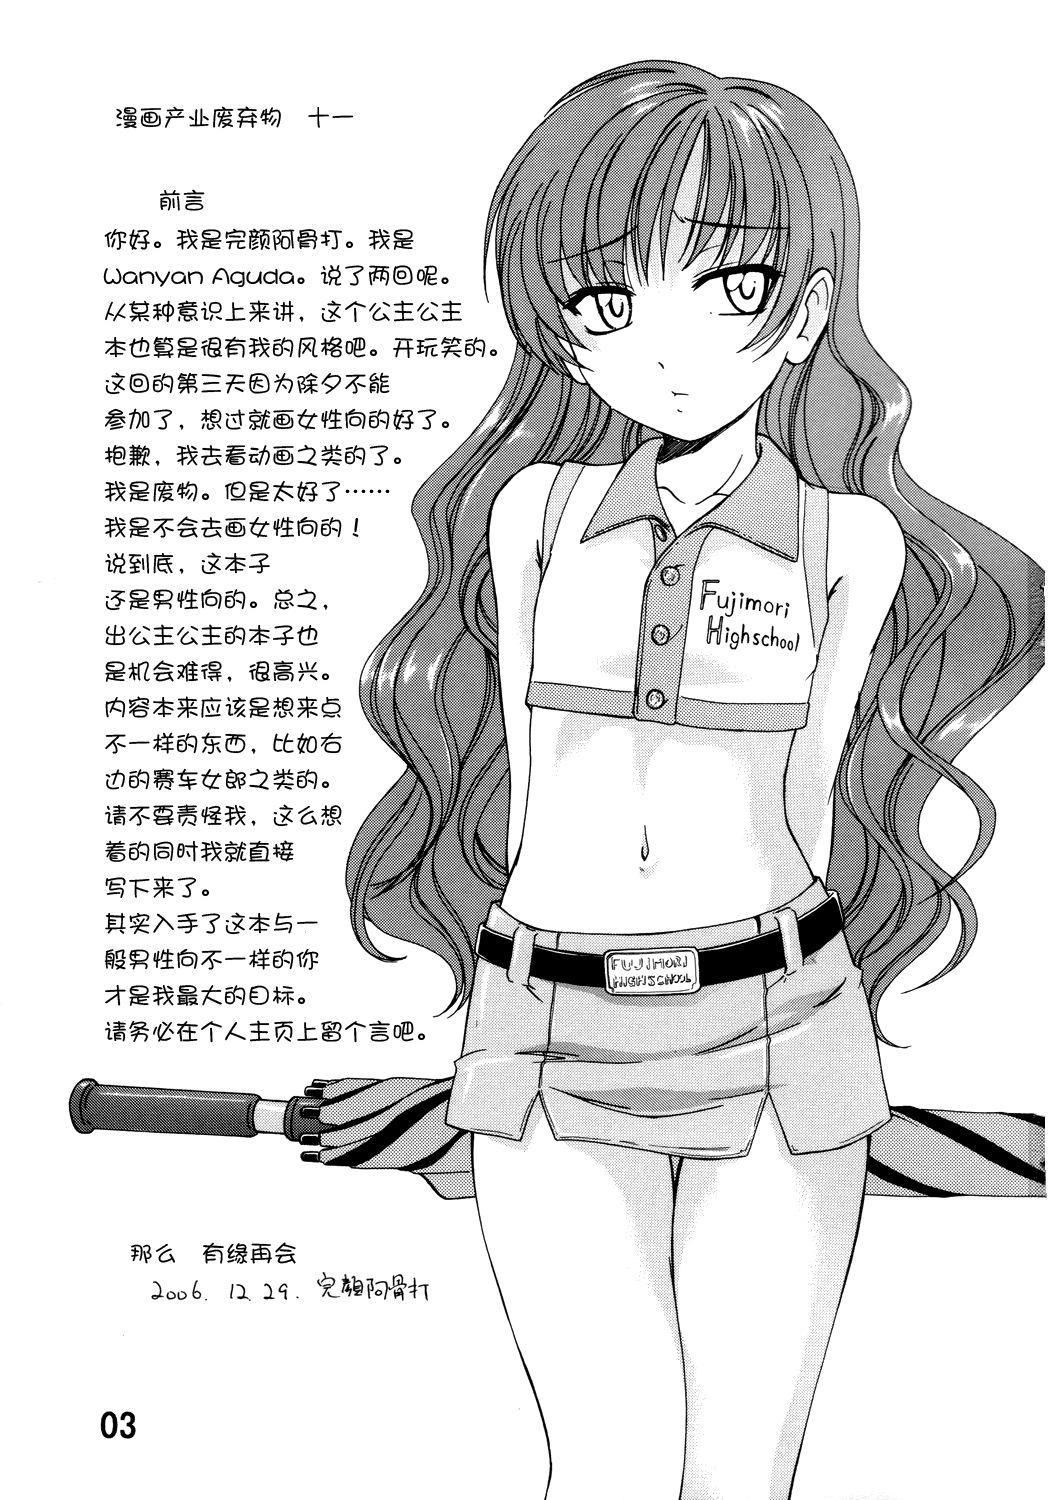 Bondage Manga Sangyou Haikibutsu 11 - Comic Industrial Wastes 11 - Princess princess Eating Pussy - Page 2